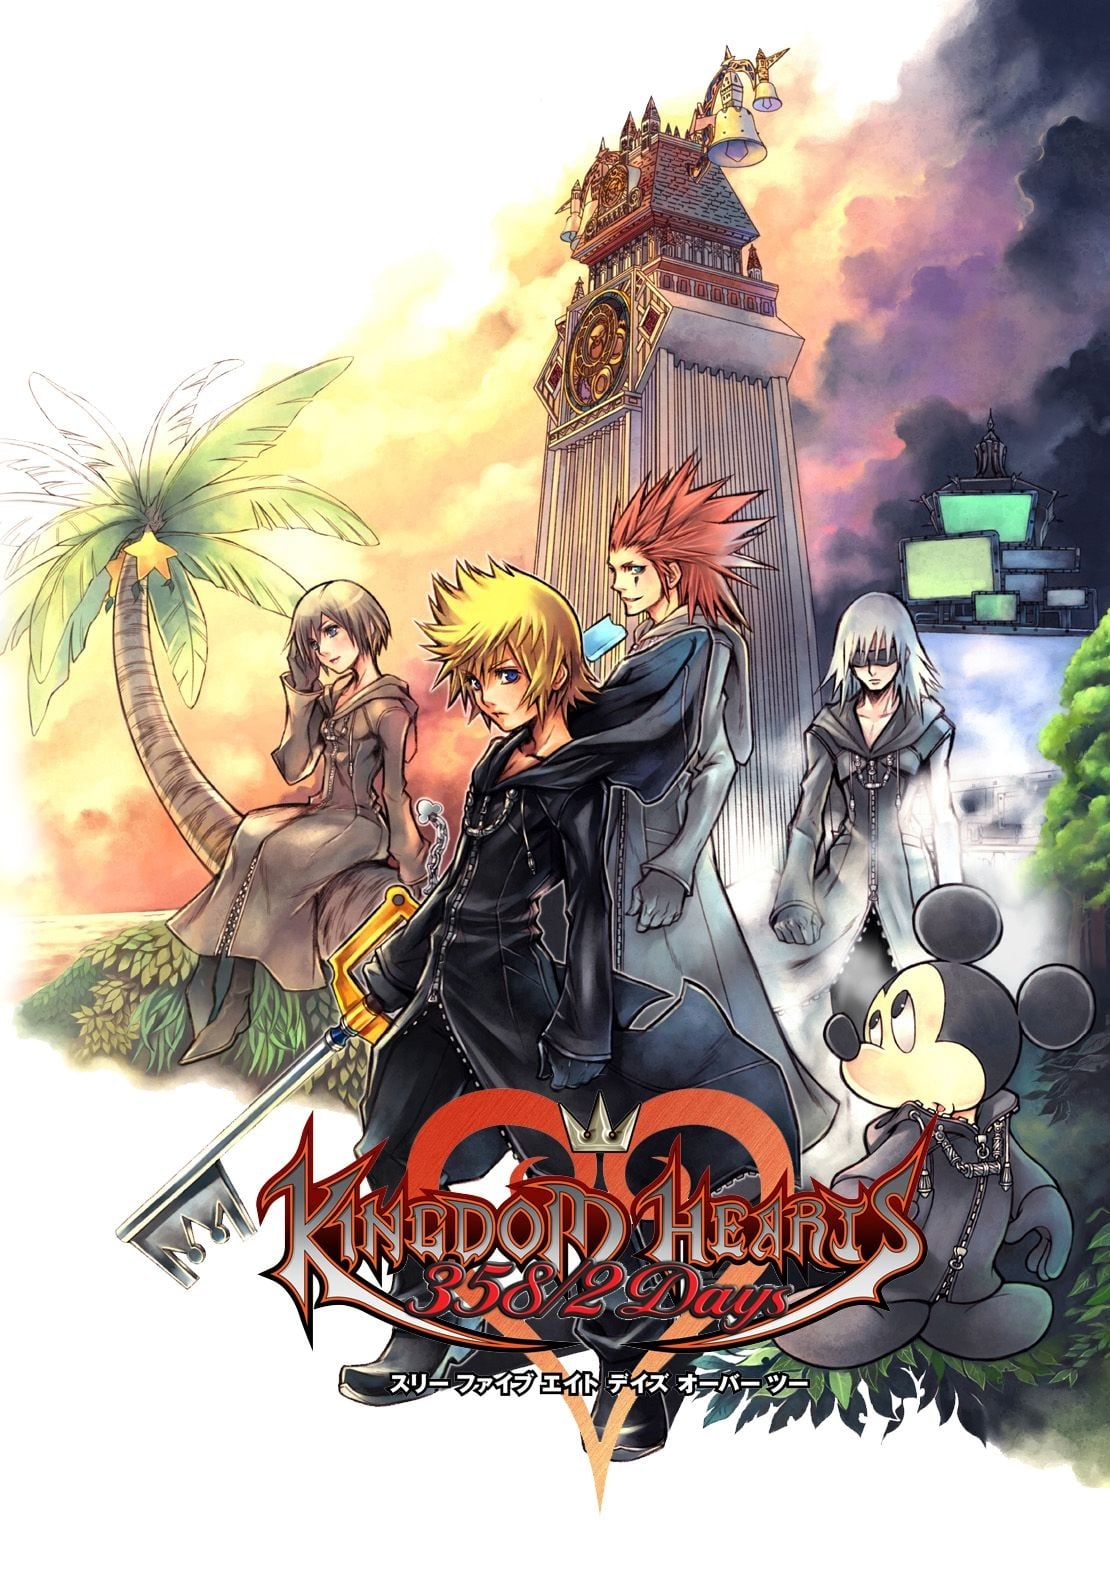 Kingdom Hearts 358/2 Days (2013)